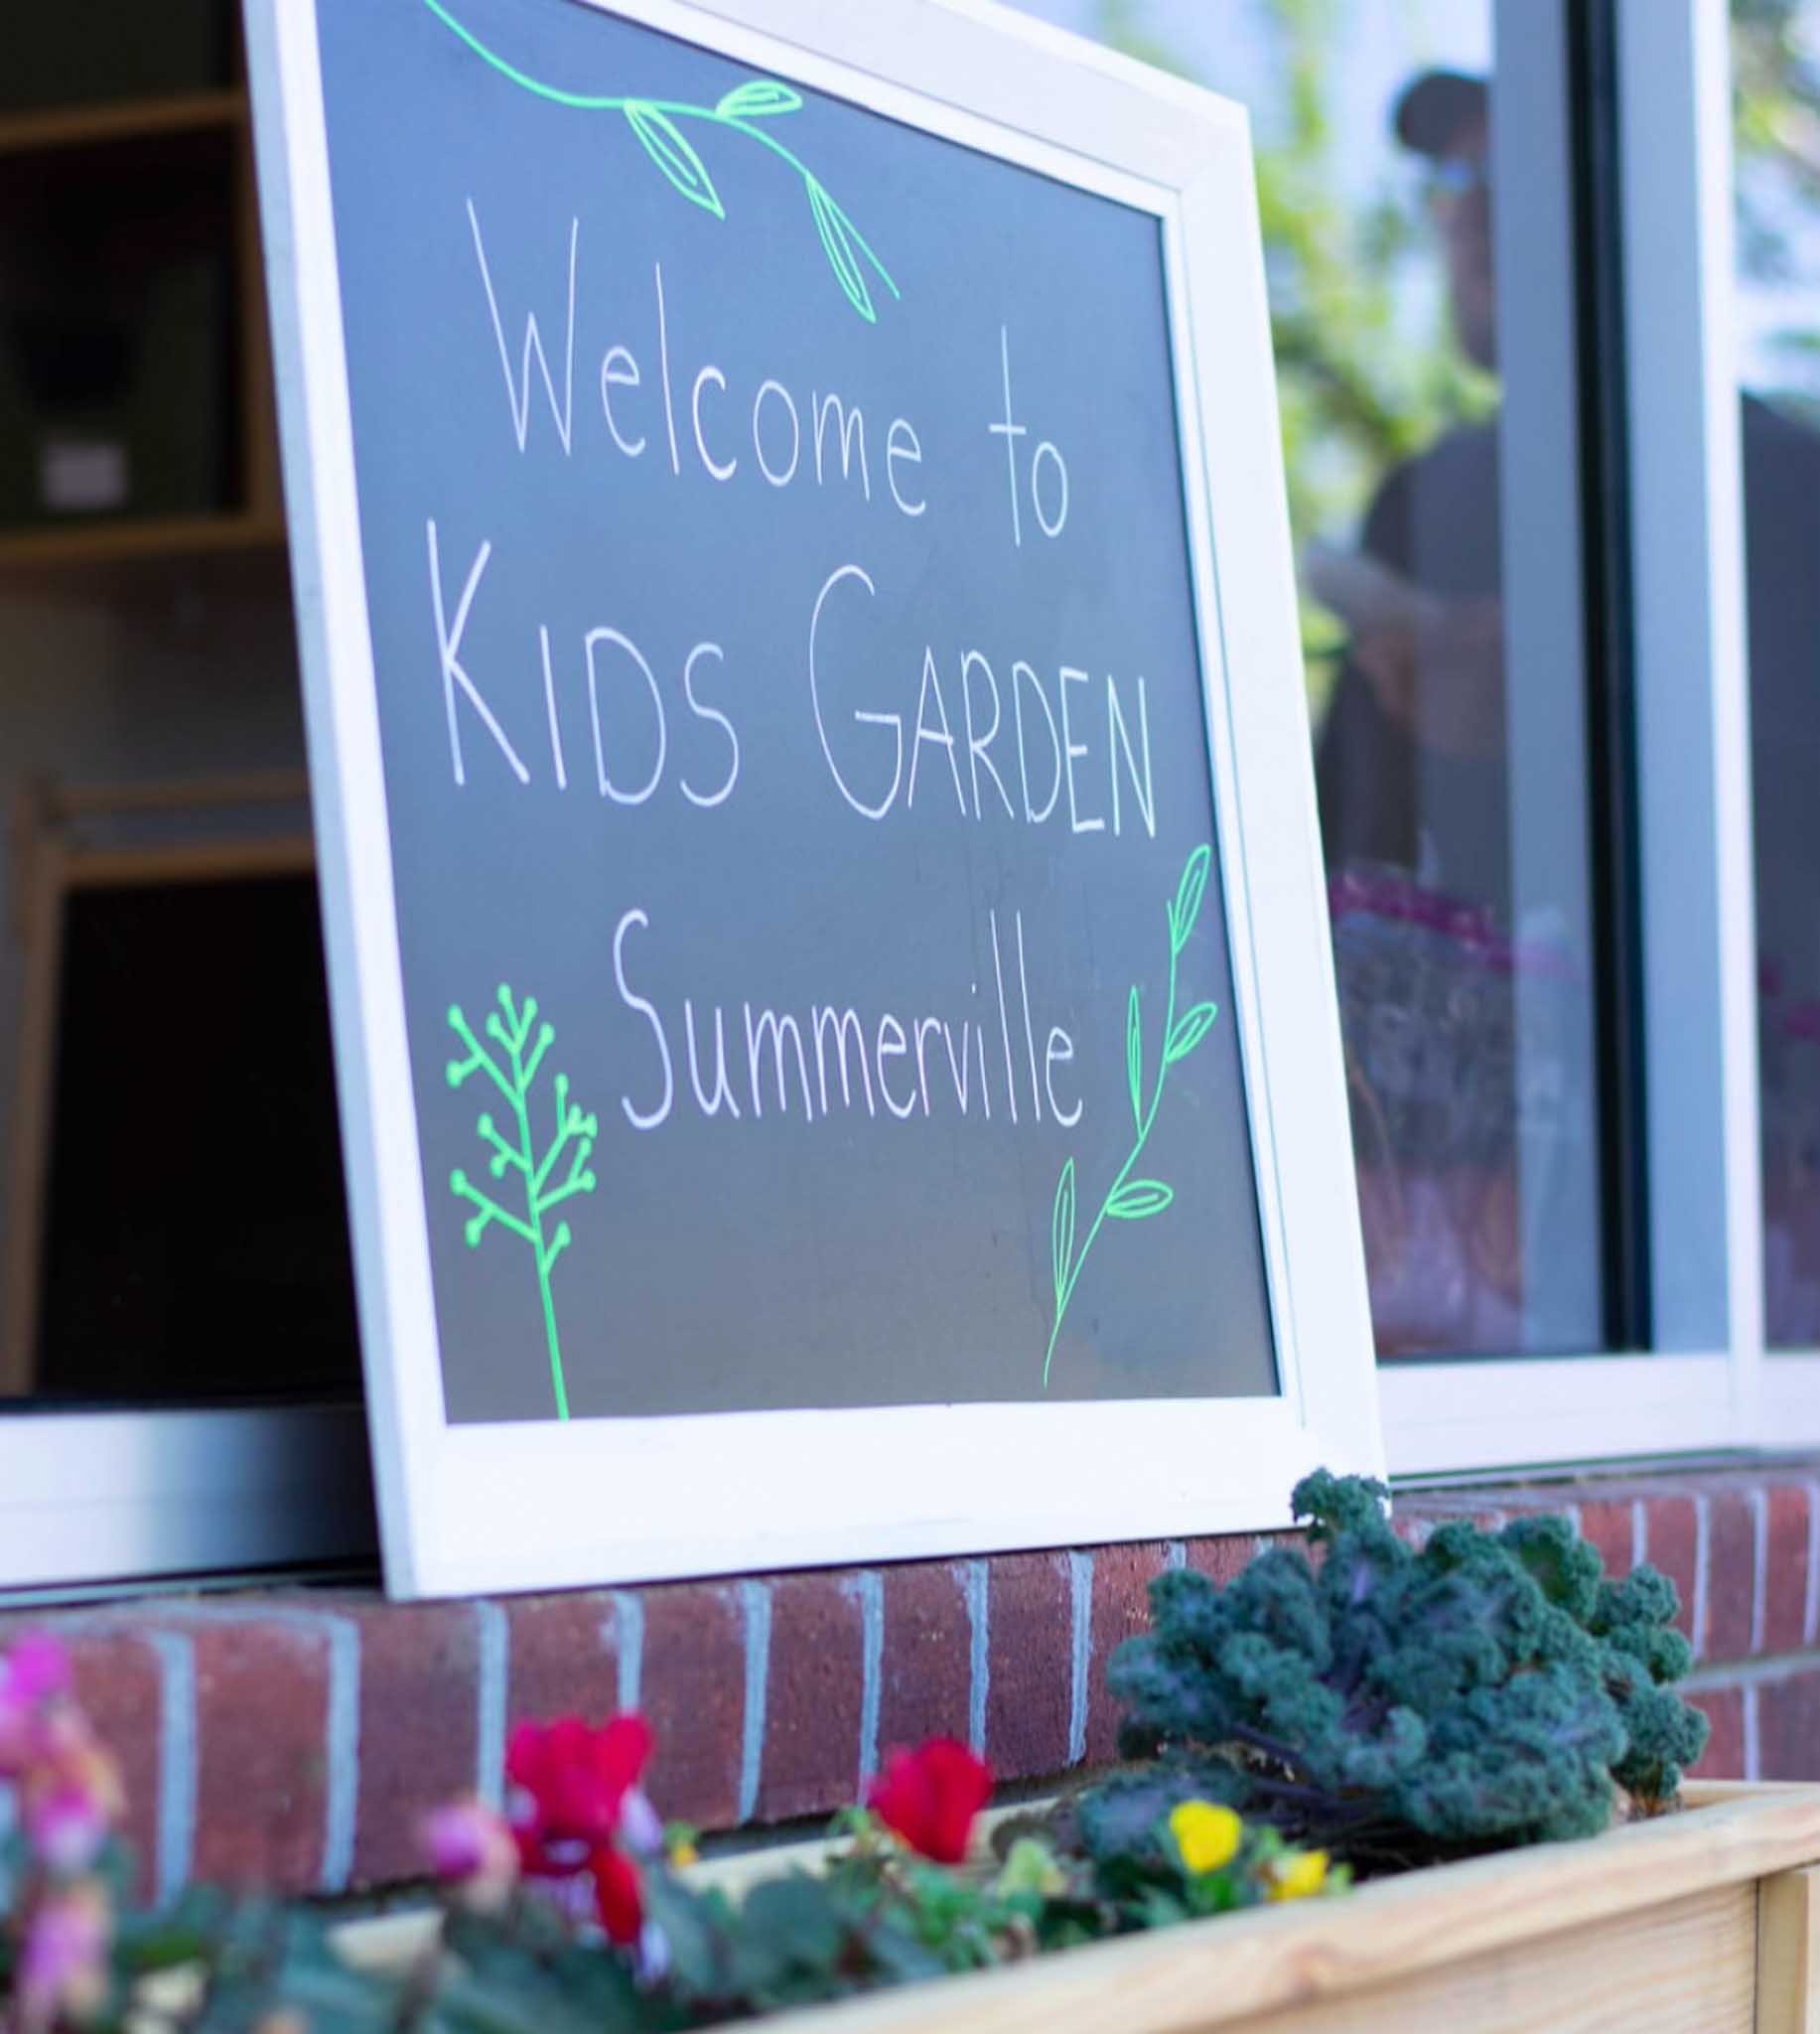 Kids Garden Summerville childcare.